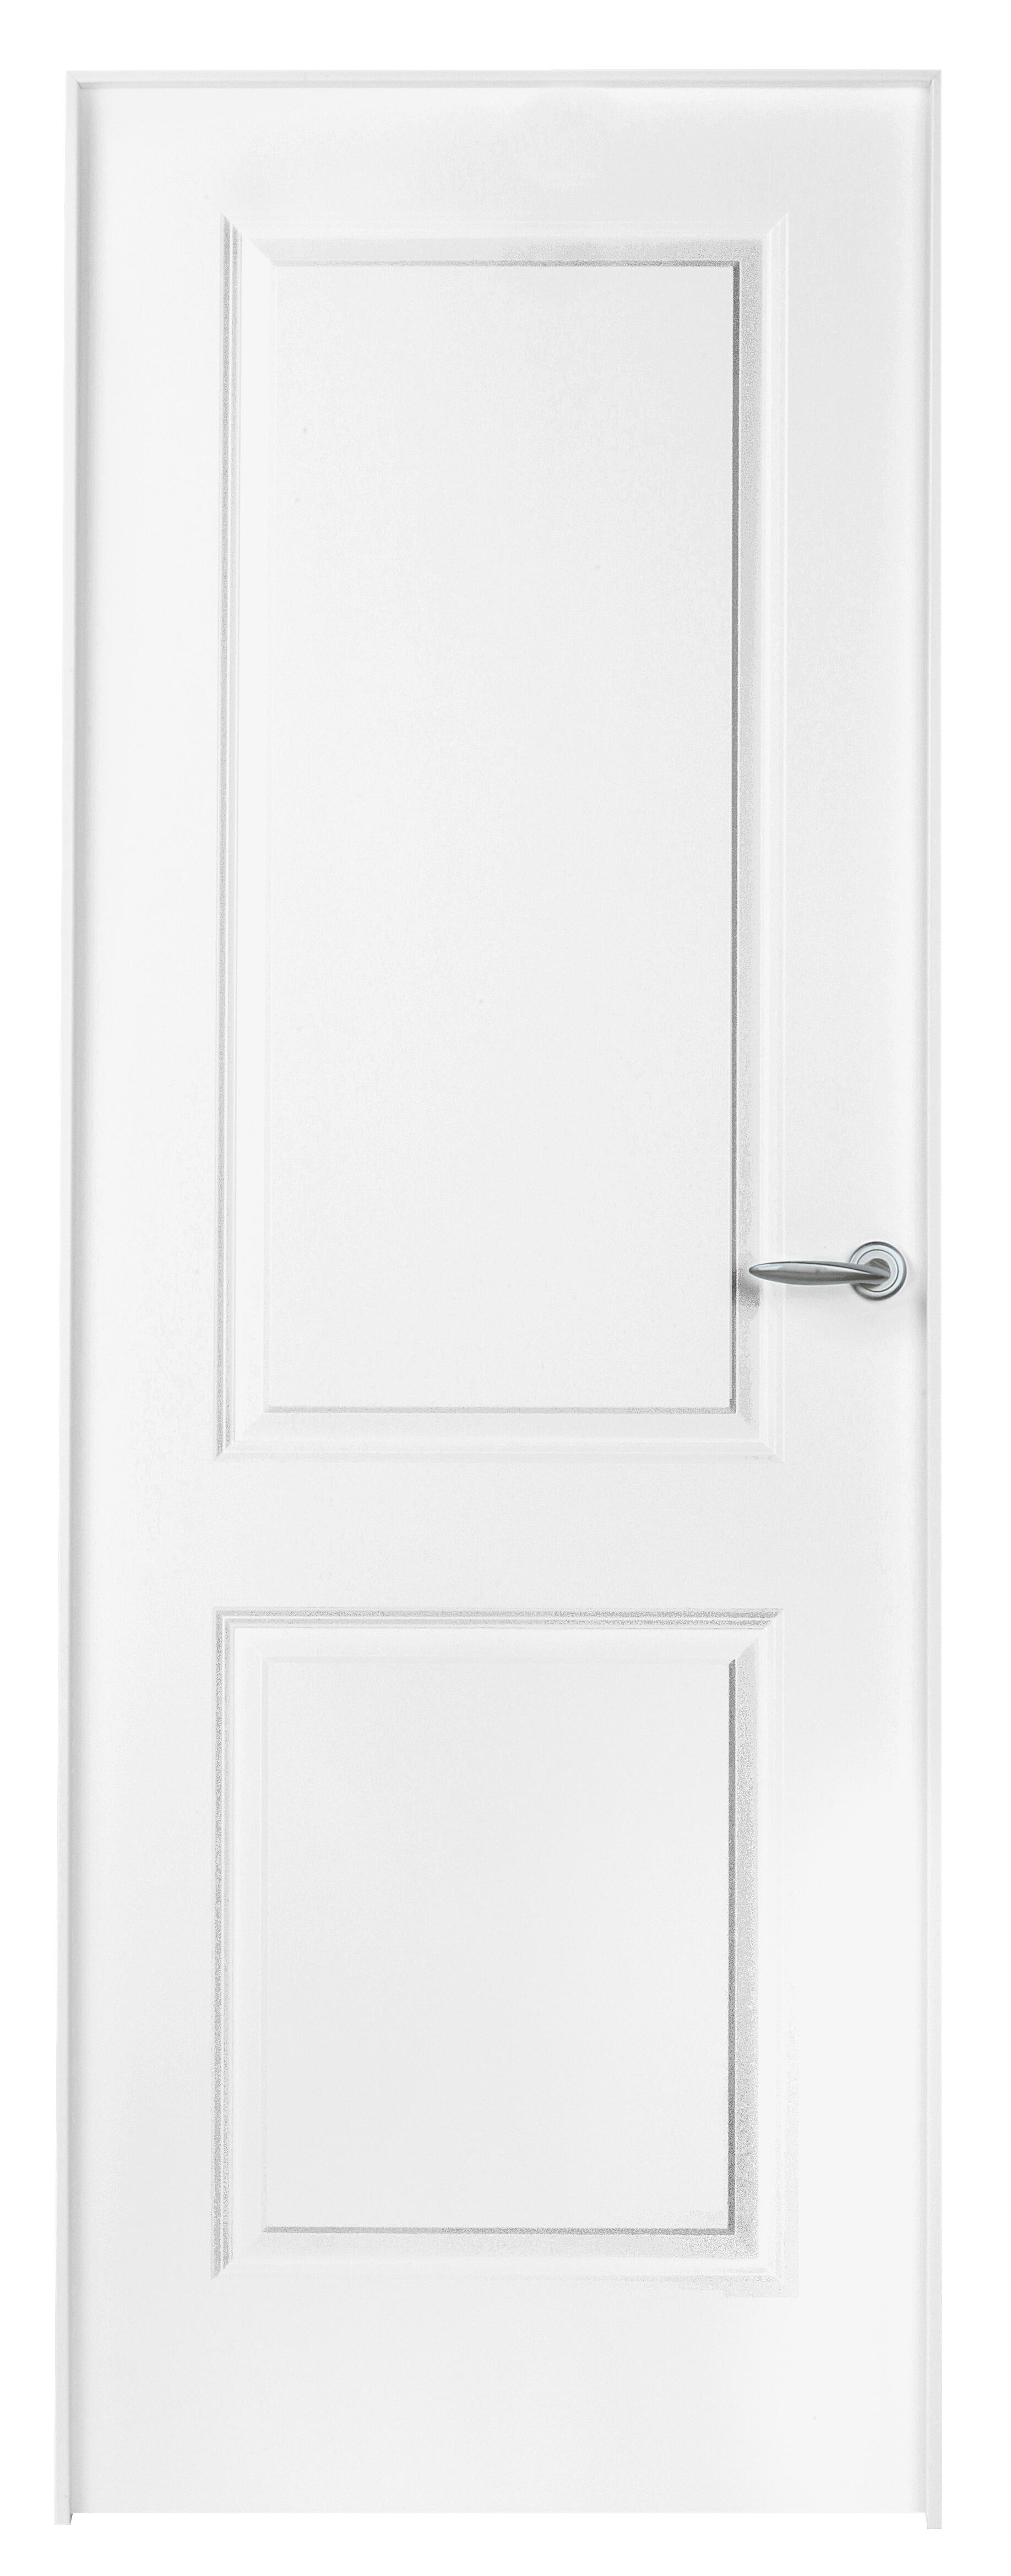 Puerta bonn blanco apertura izquierda 62.5cm